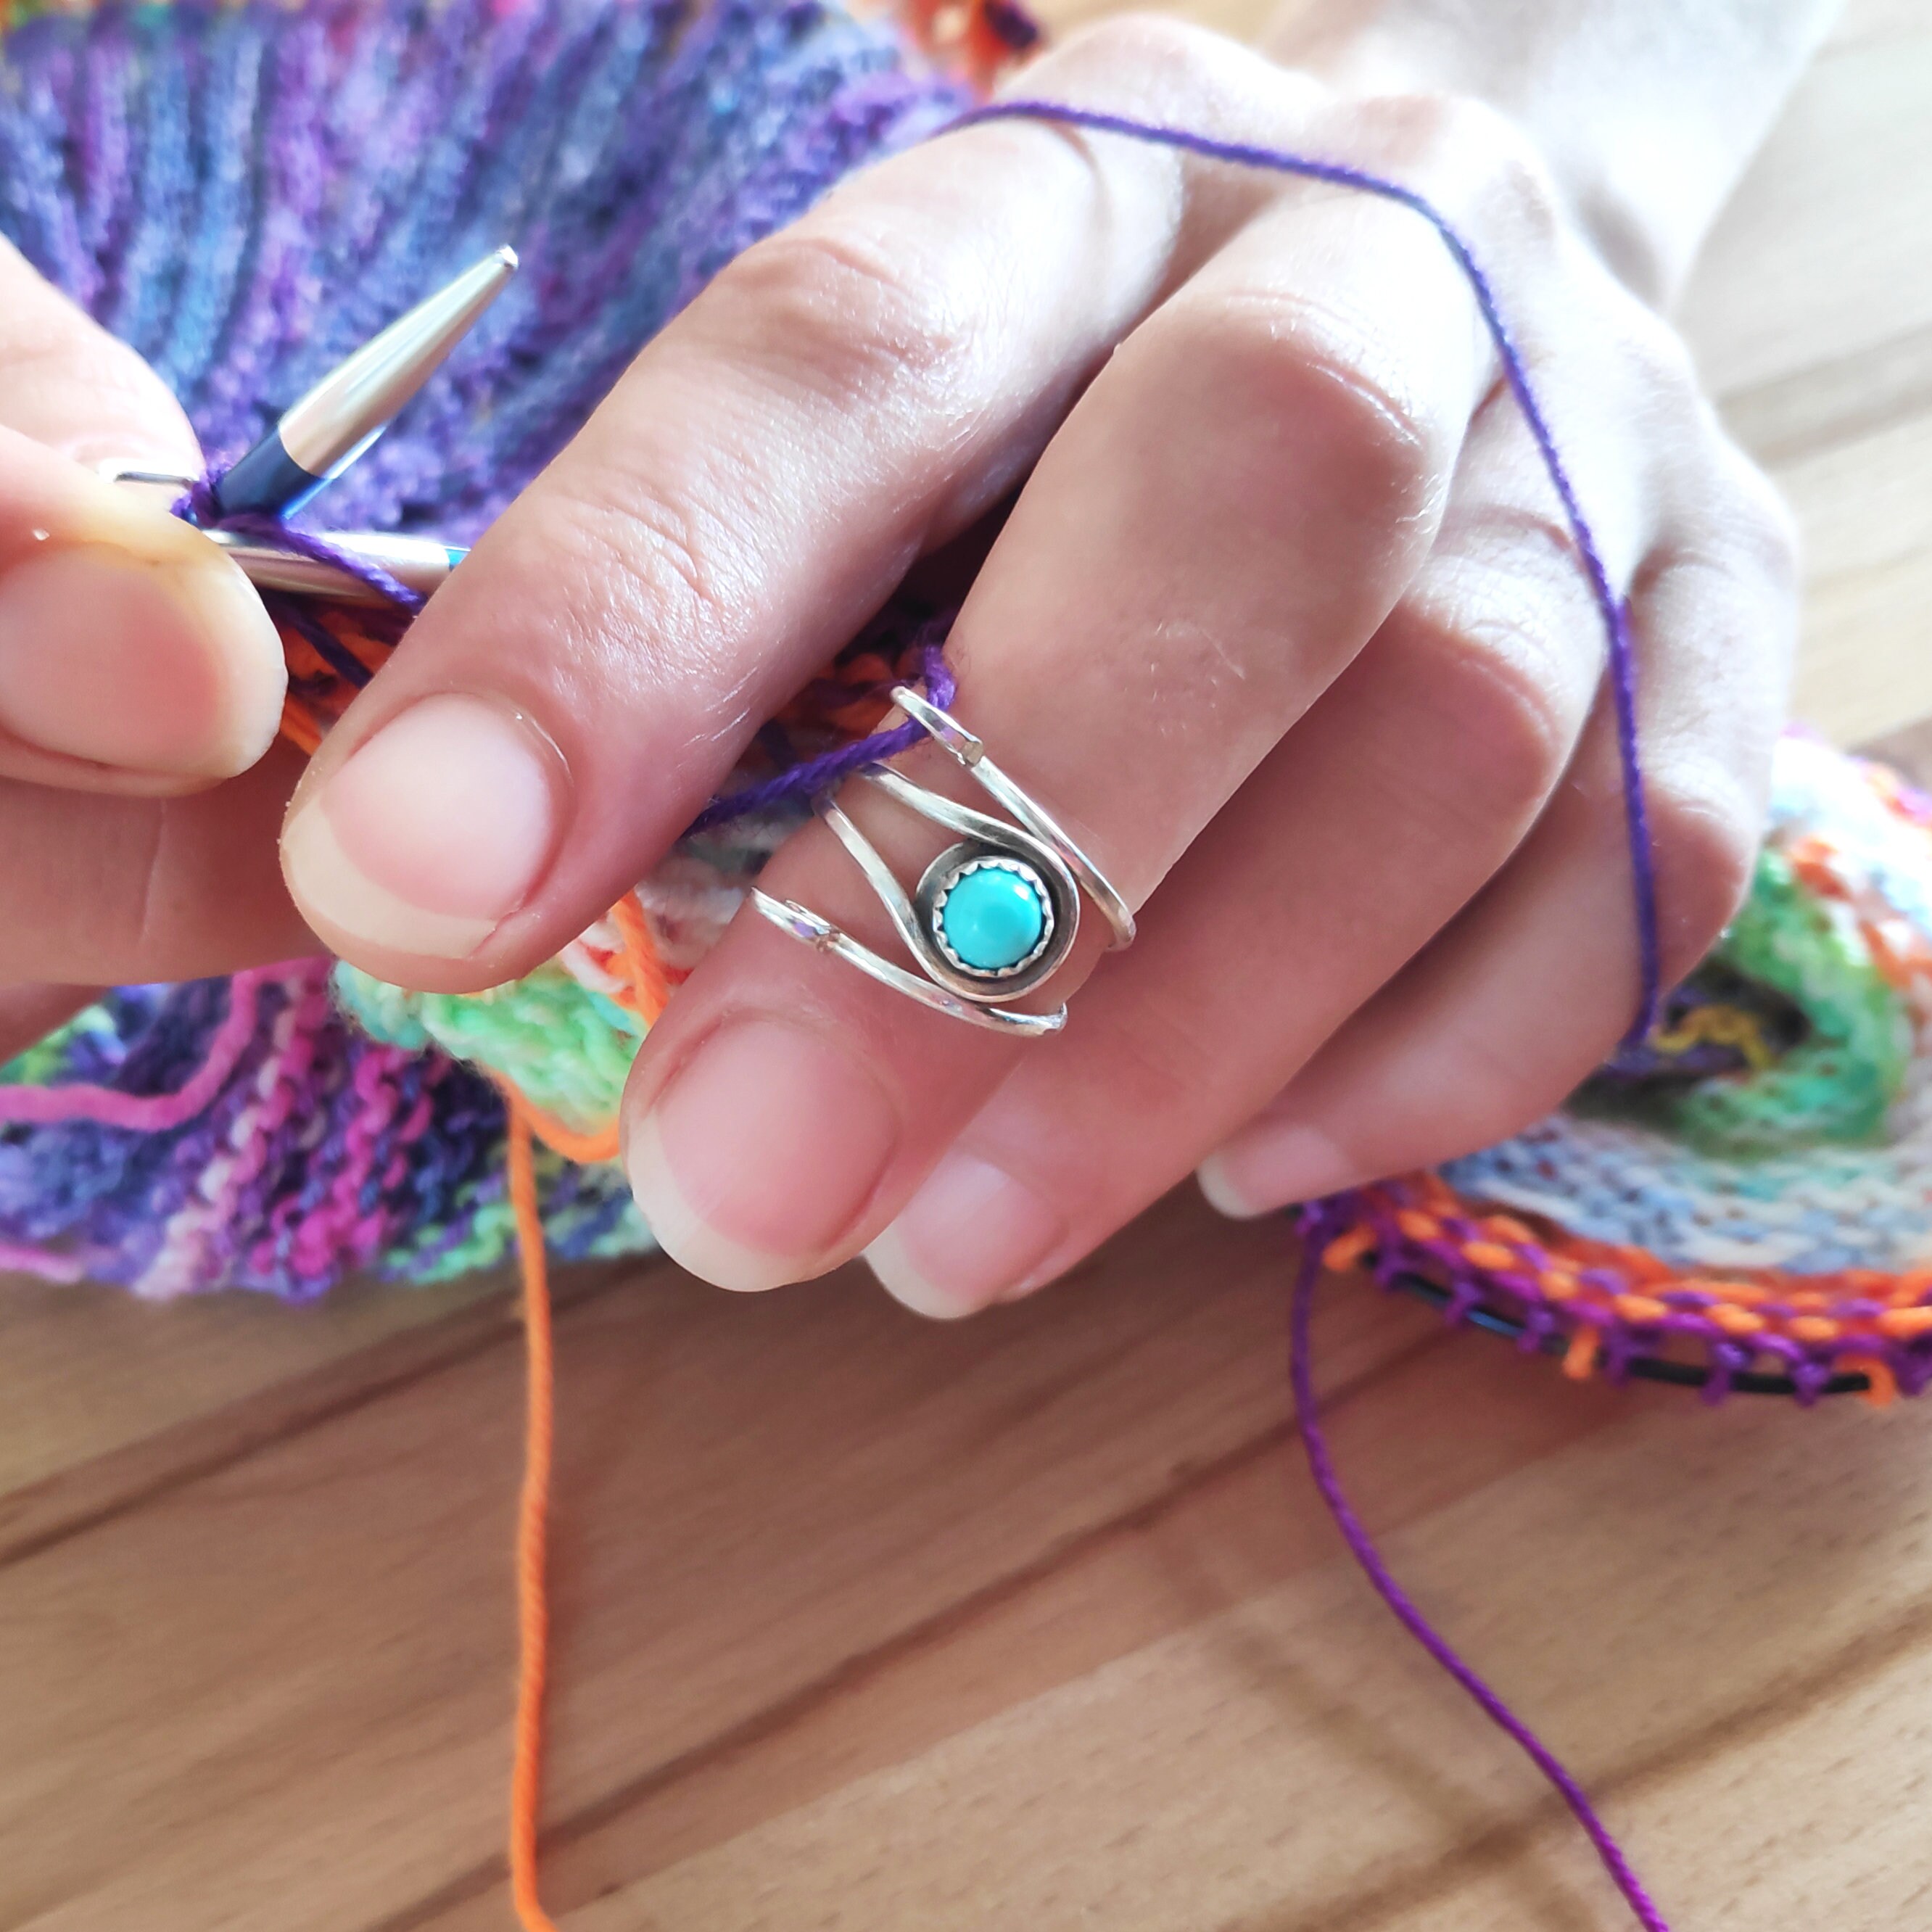 Cosmos Yarn Guide Ring Crochet / Knitting Tension Ring 935 Sterling Silver  